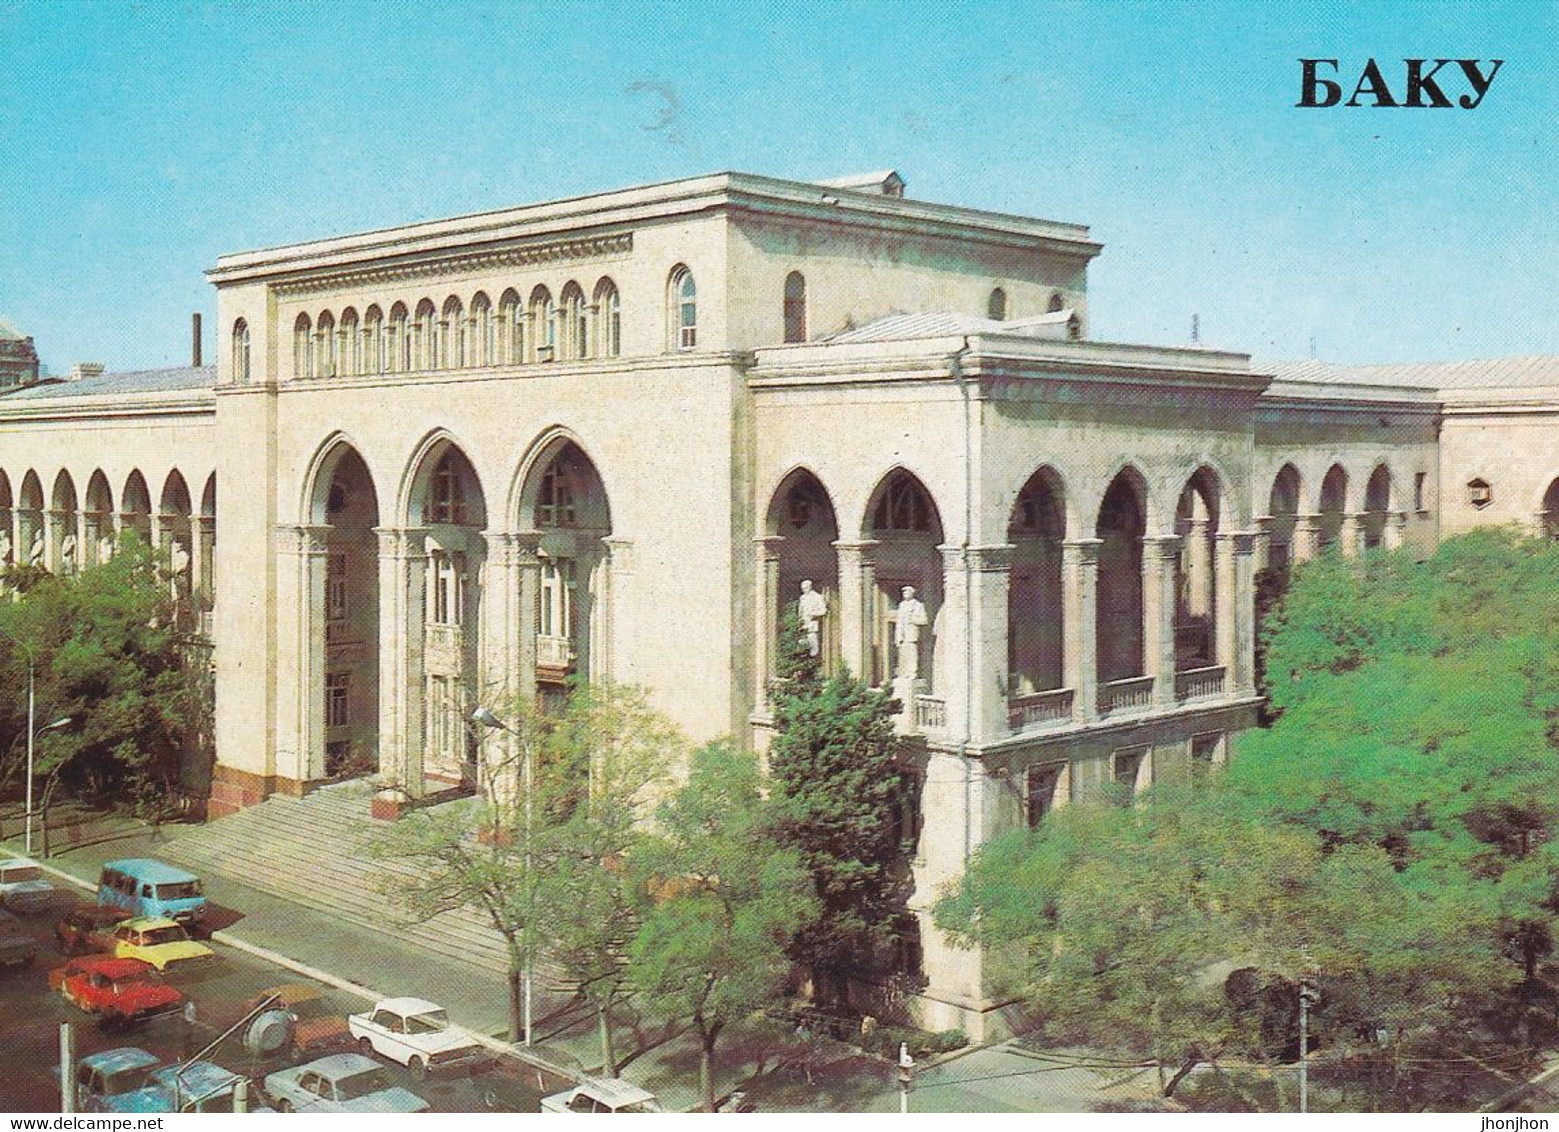 Azerbaidjan - Postcard Unused  -  Baku - The Library Named After M.F.Akhundov - Azerbaïjan